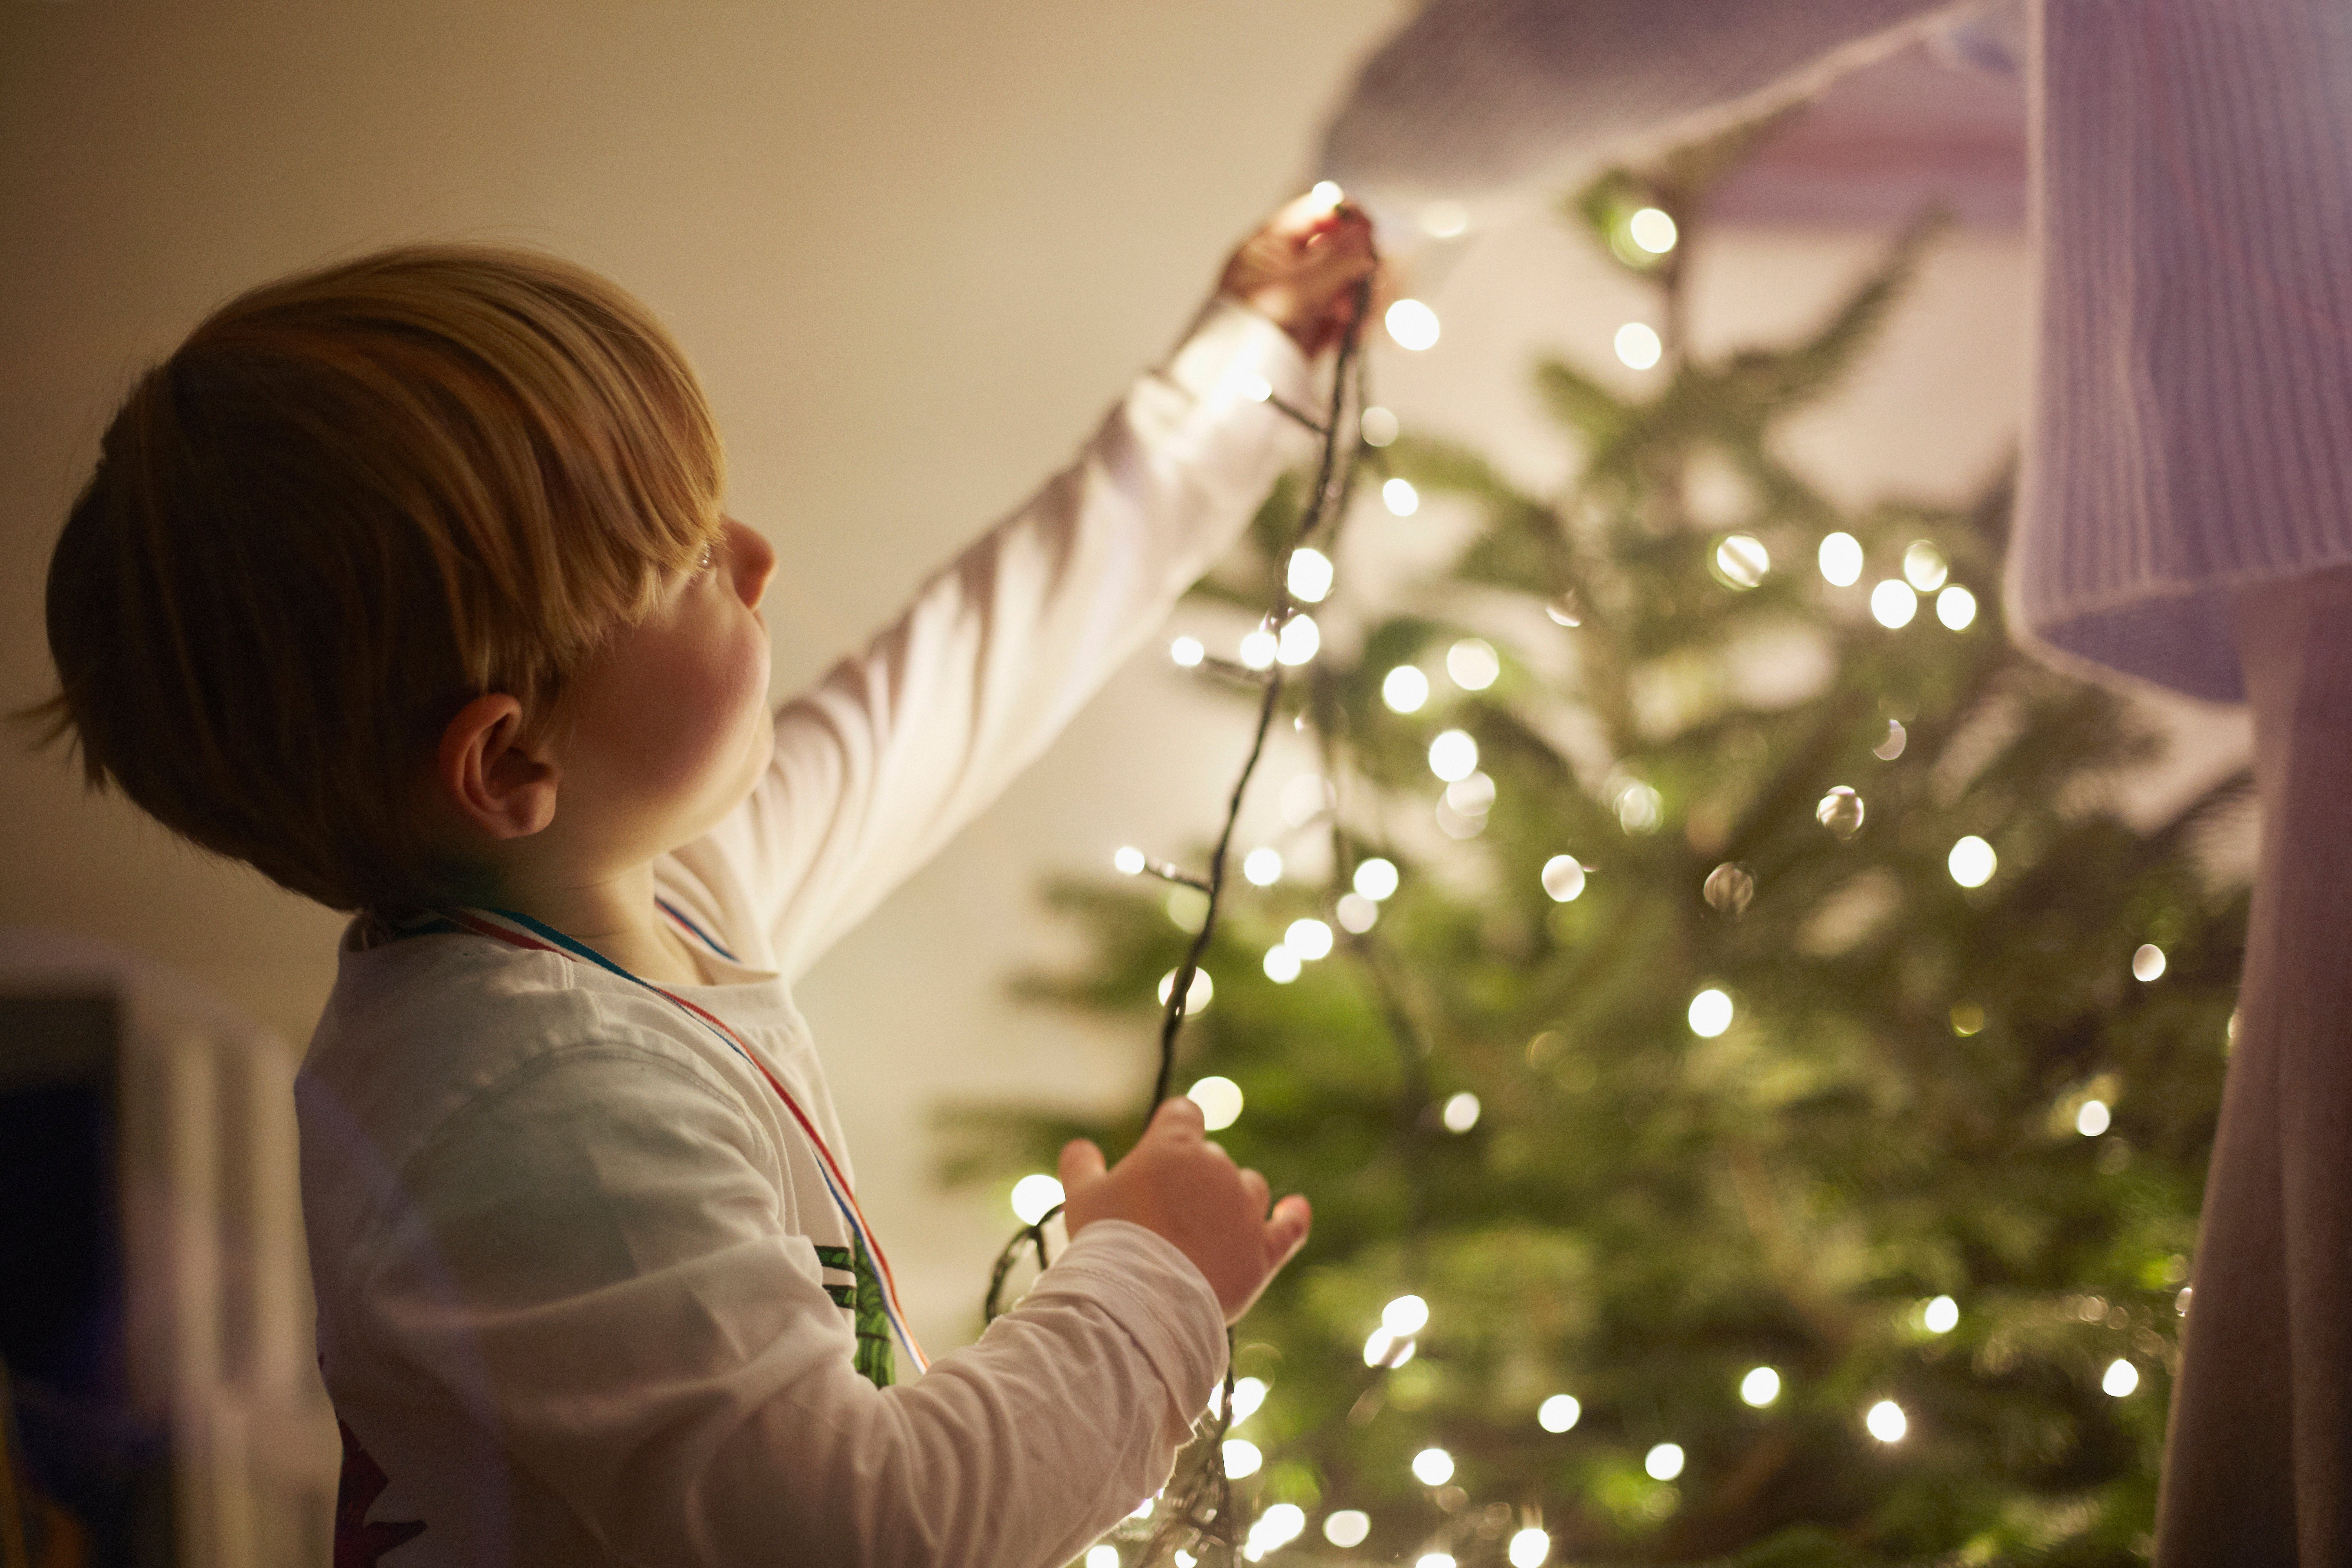 Little boy hanging up Christmas lights on tree.